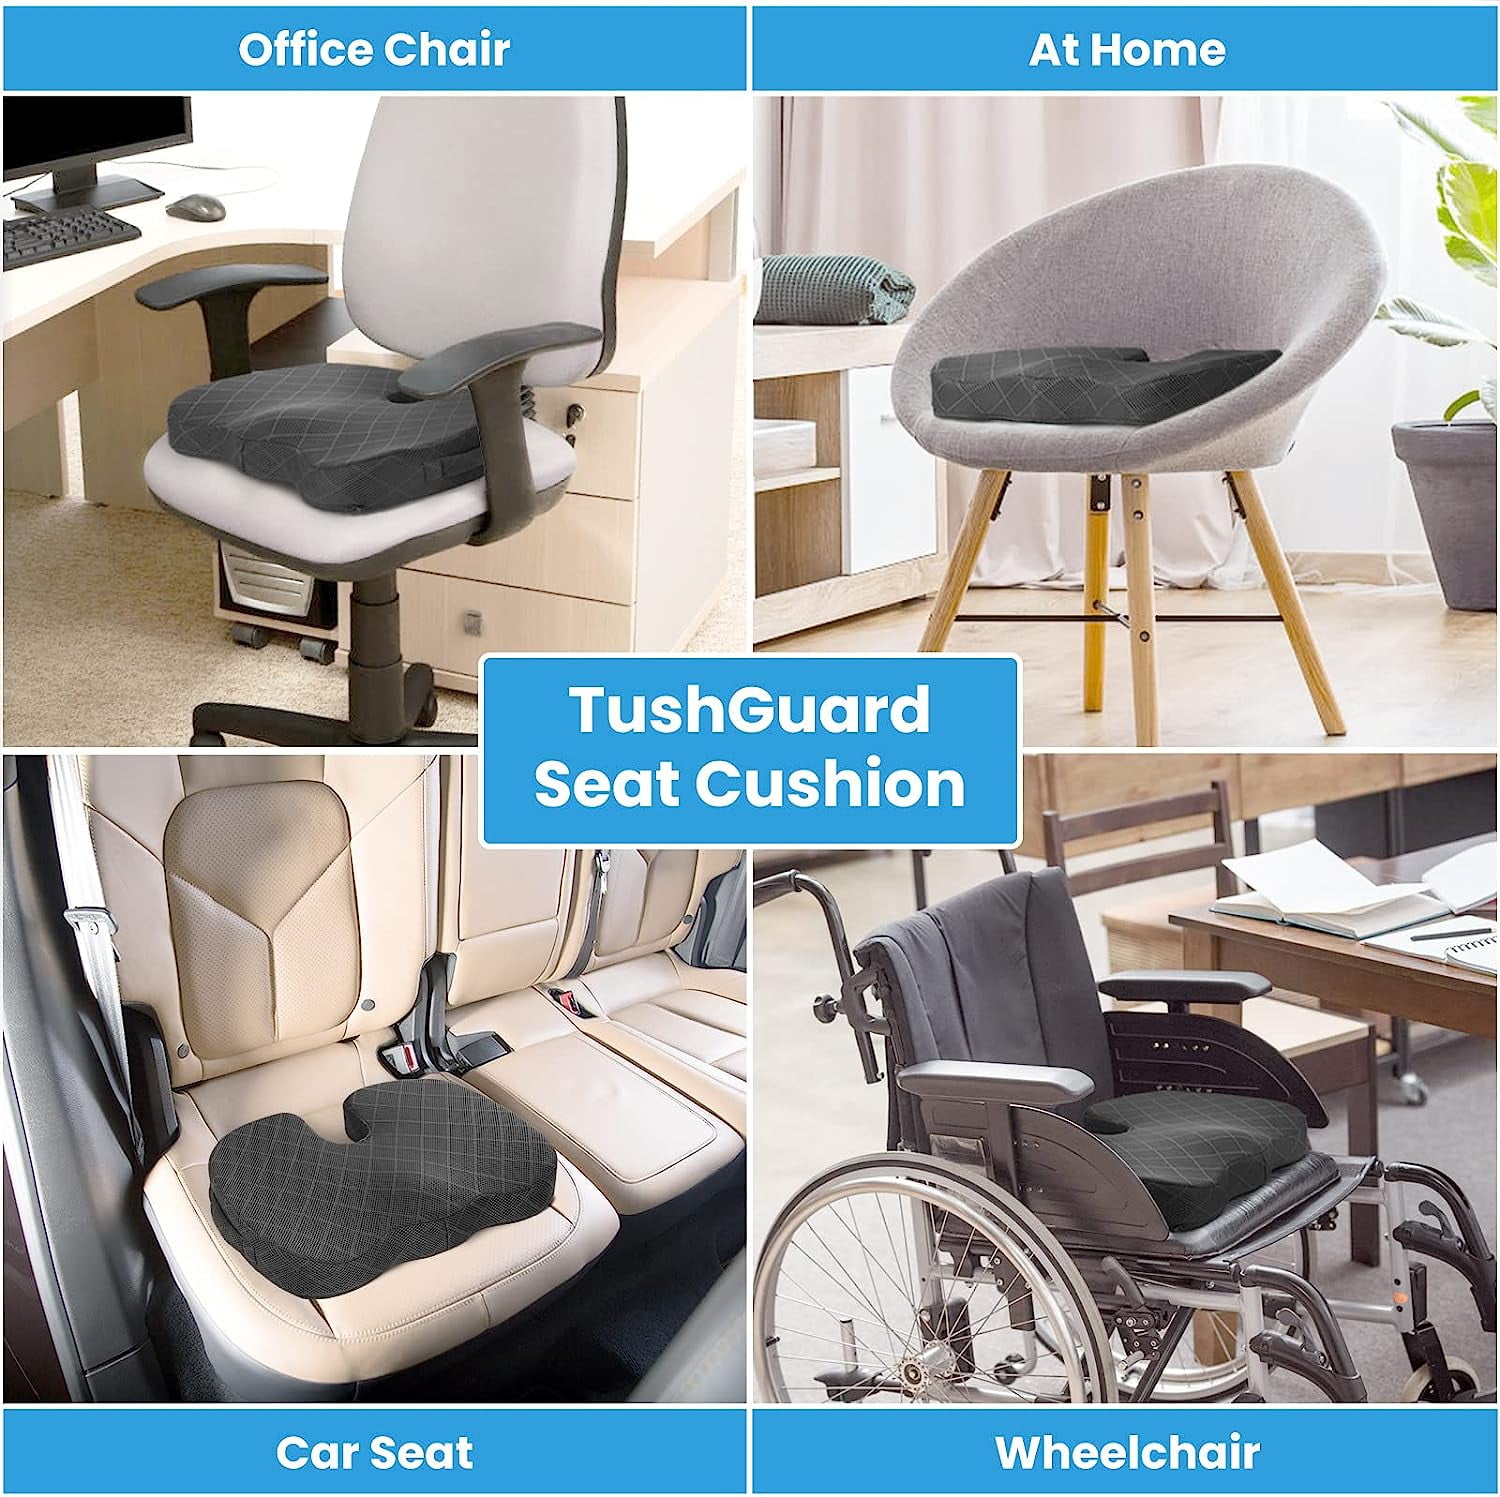  TushGuard Seat Cushion, Office Chair Cushions, Car Seat Cushion,  Non-Slip Relief Chair Pad, Memory Foam Butt Pillow for Computer Desk,  Office Chair, Grey : Automotive